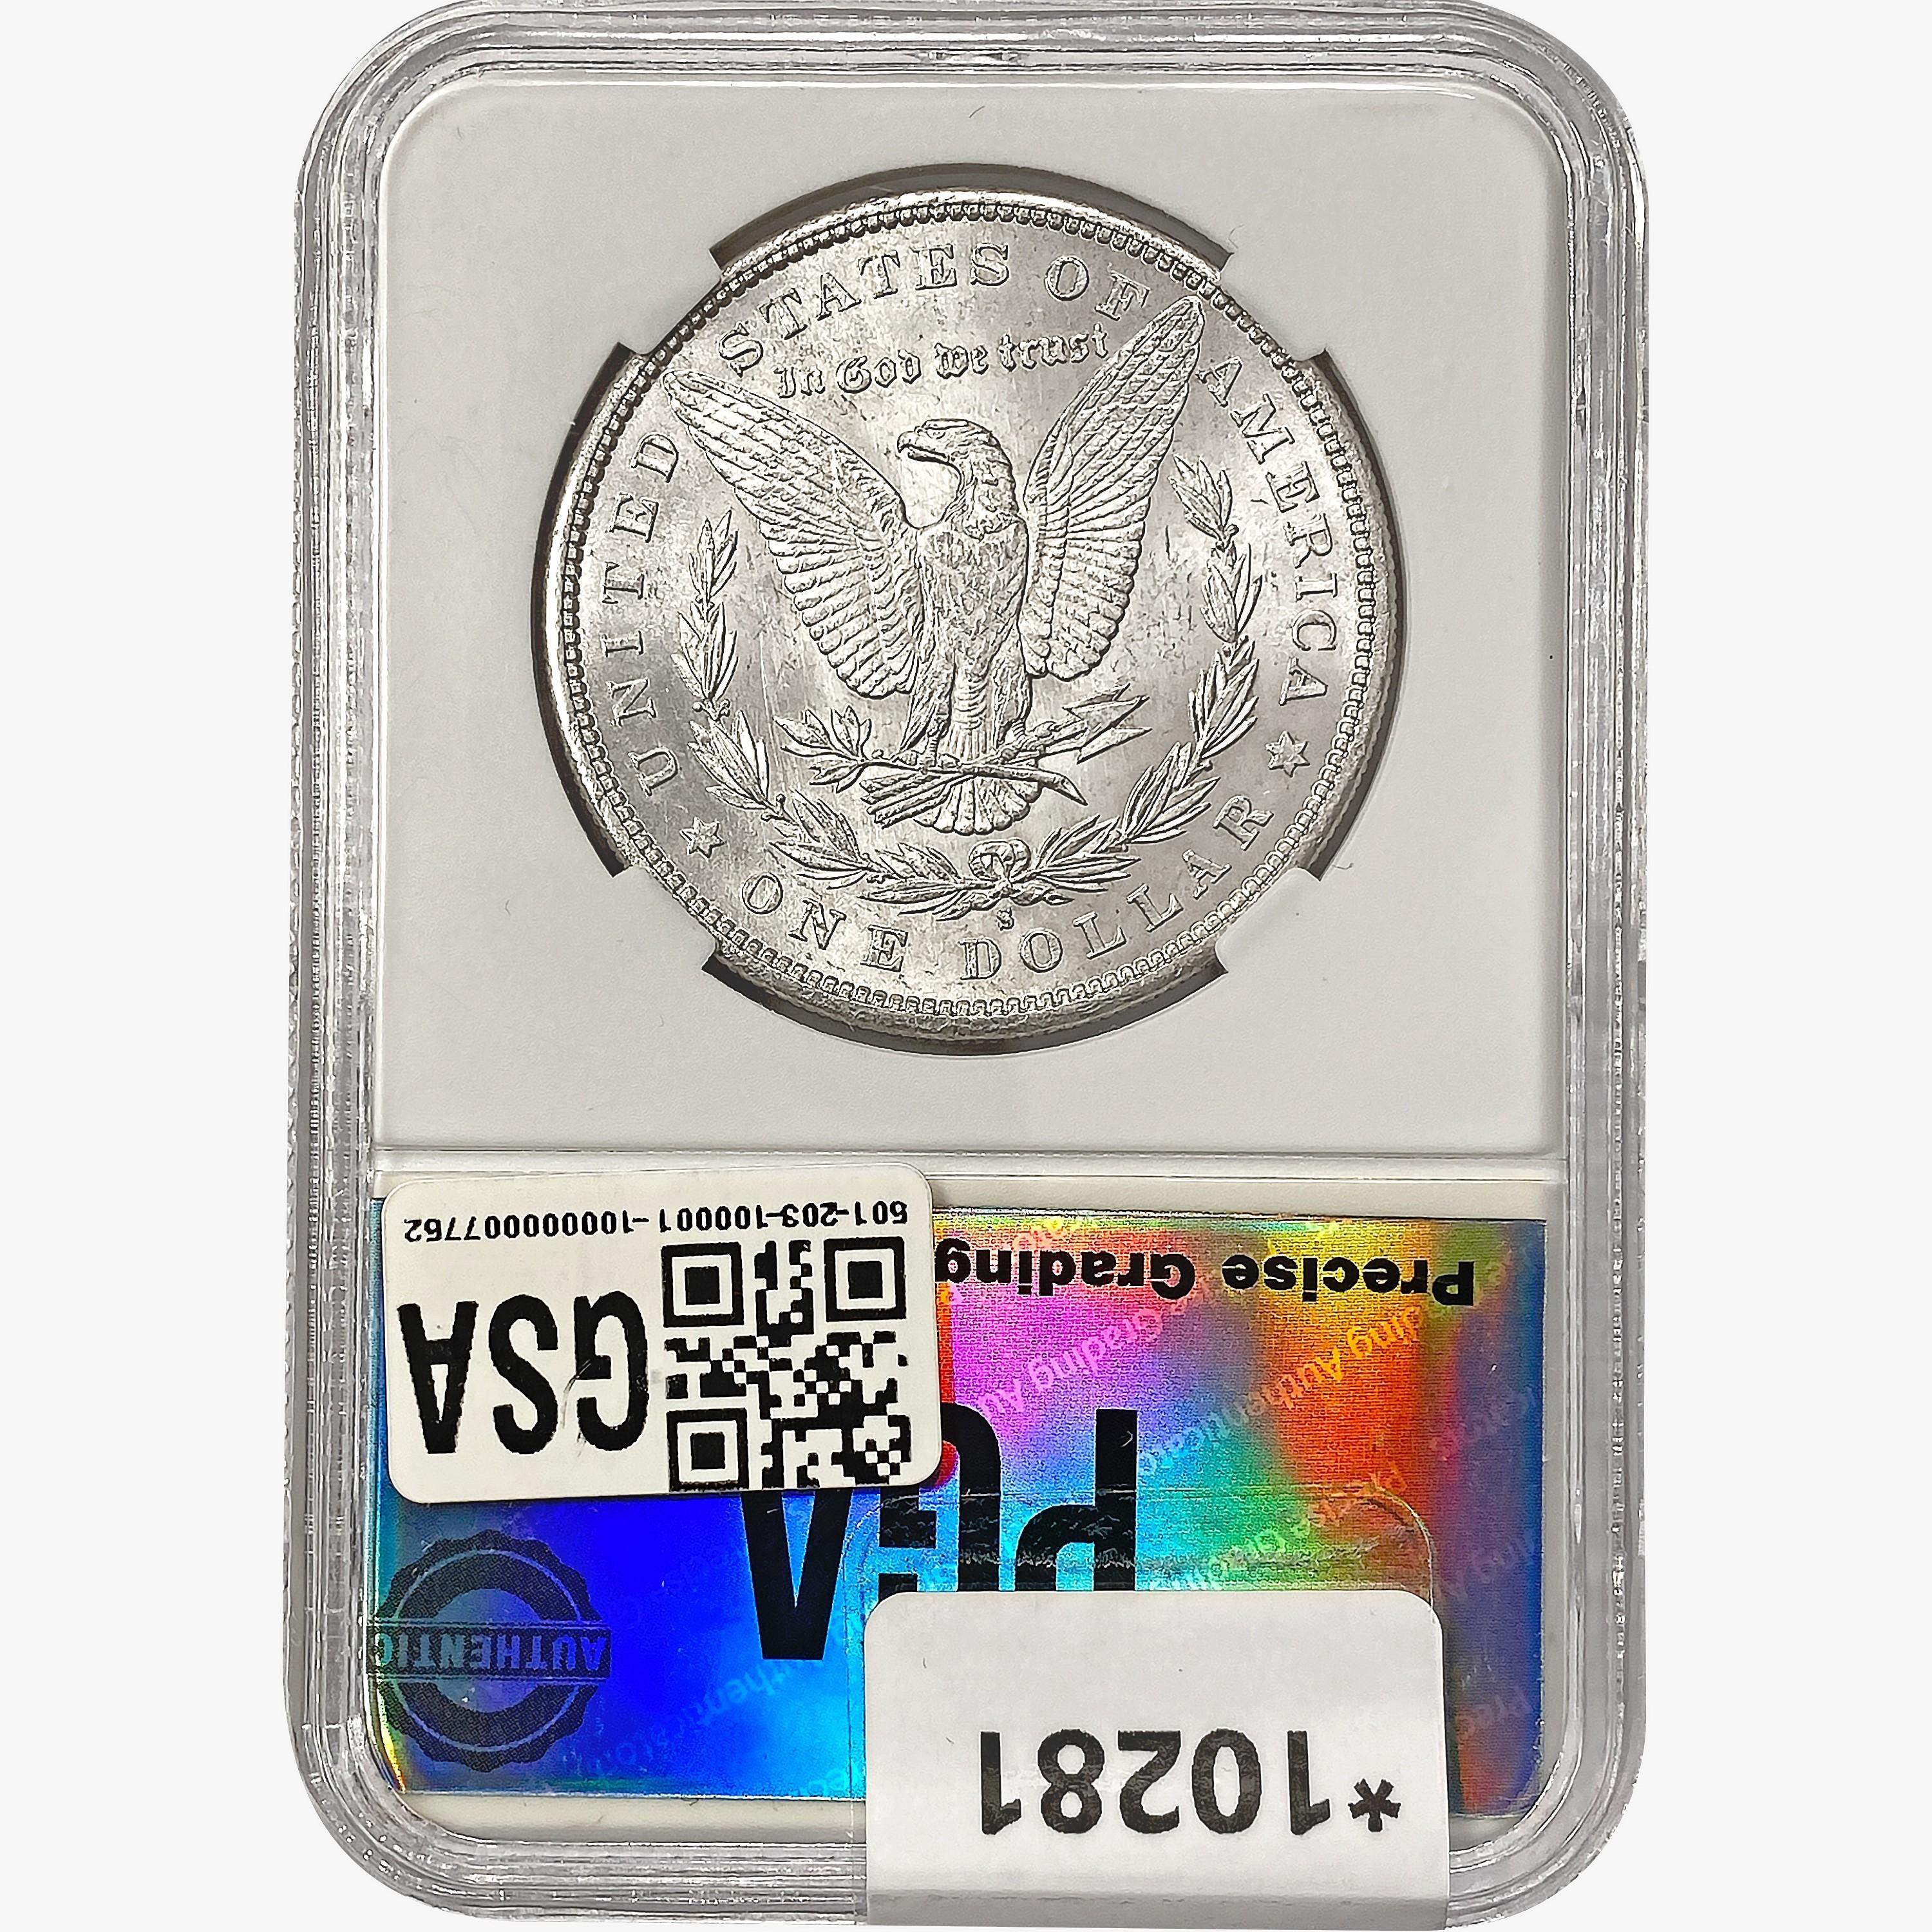 1879-S Morgan Silver Dollar PGA MS66